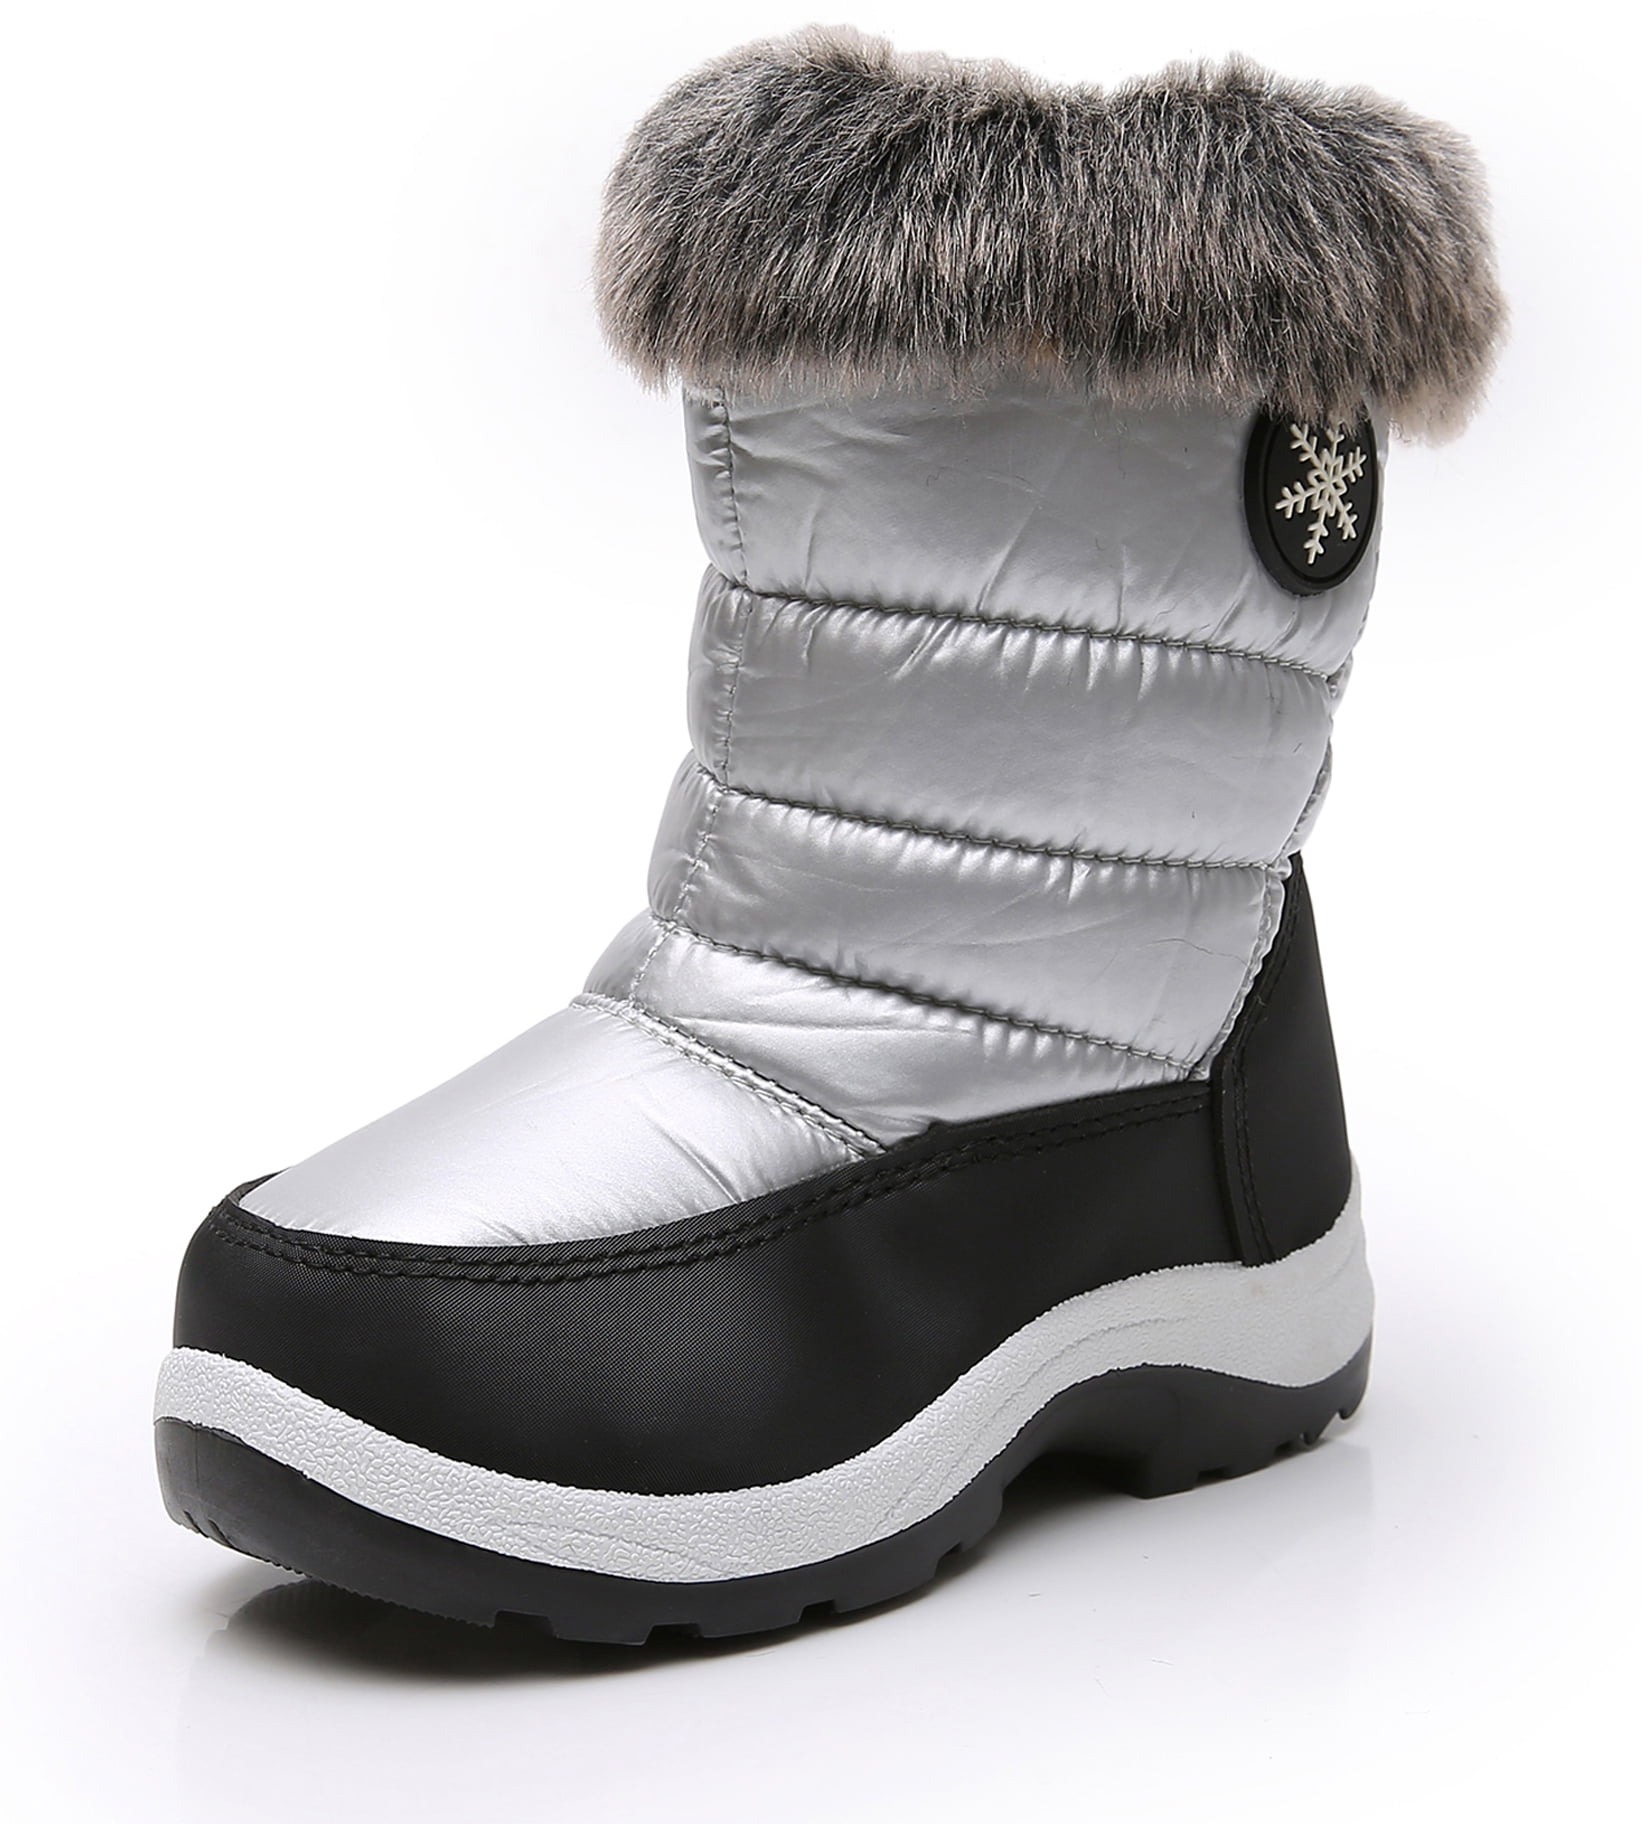 Toddler/Little Apakowa Kids Girls Boys Insulated Fur Winter Warm Snow Boots 